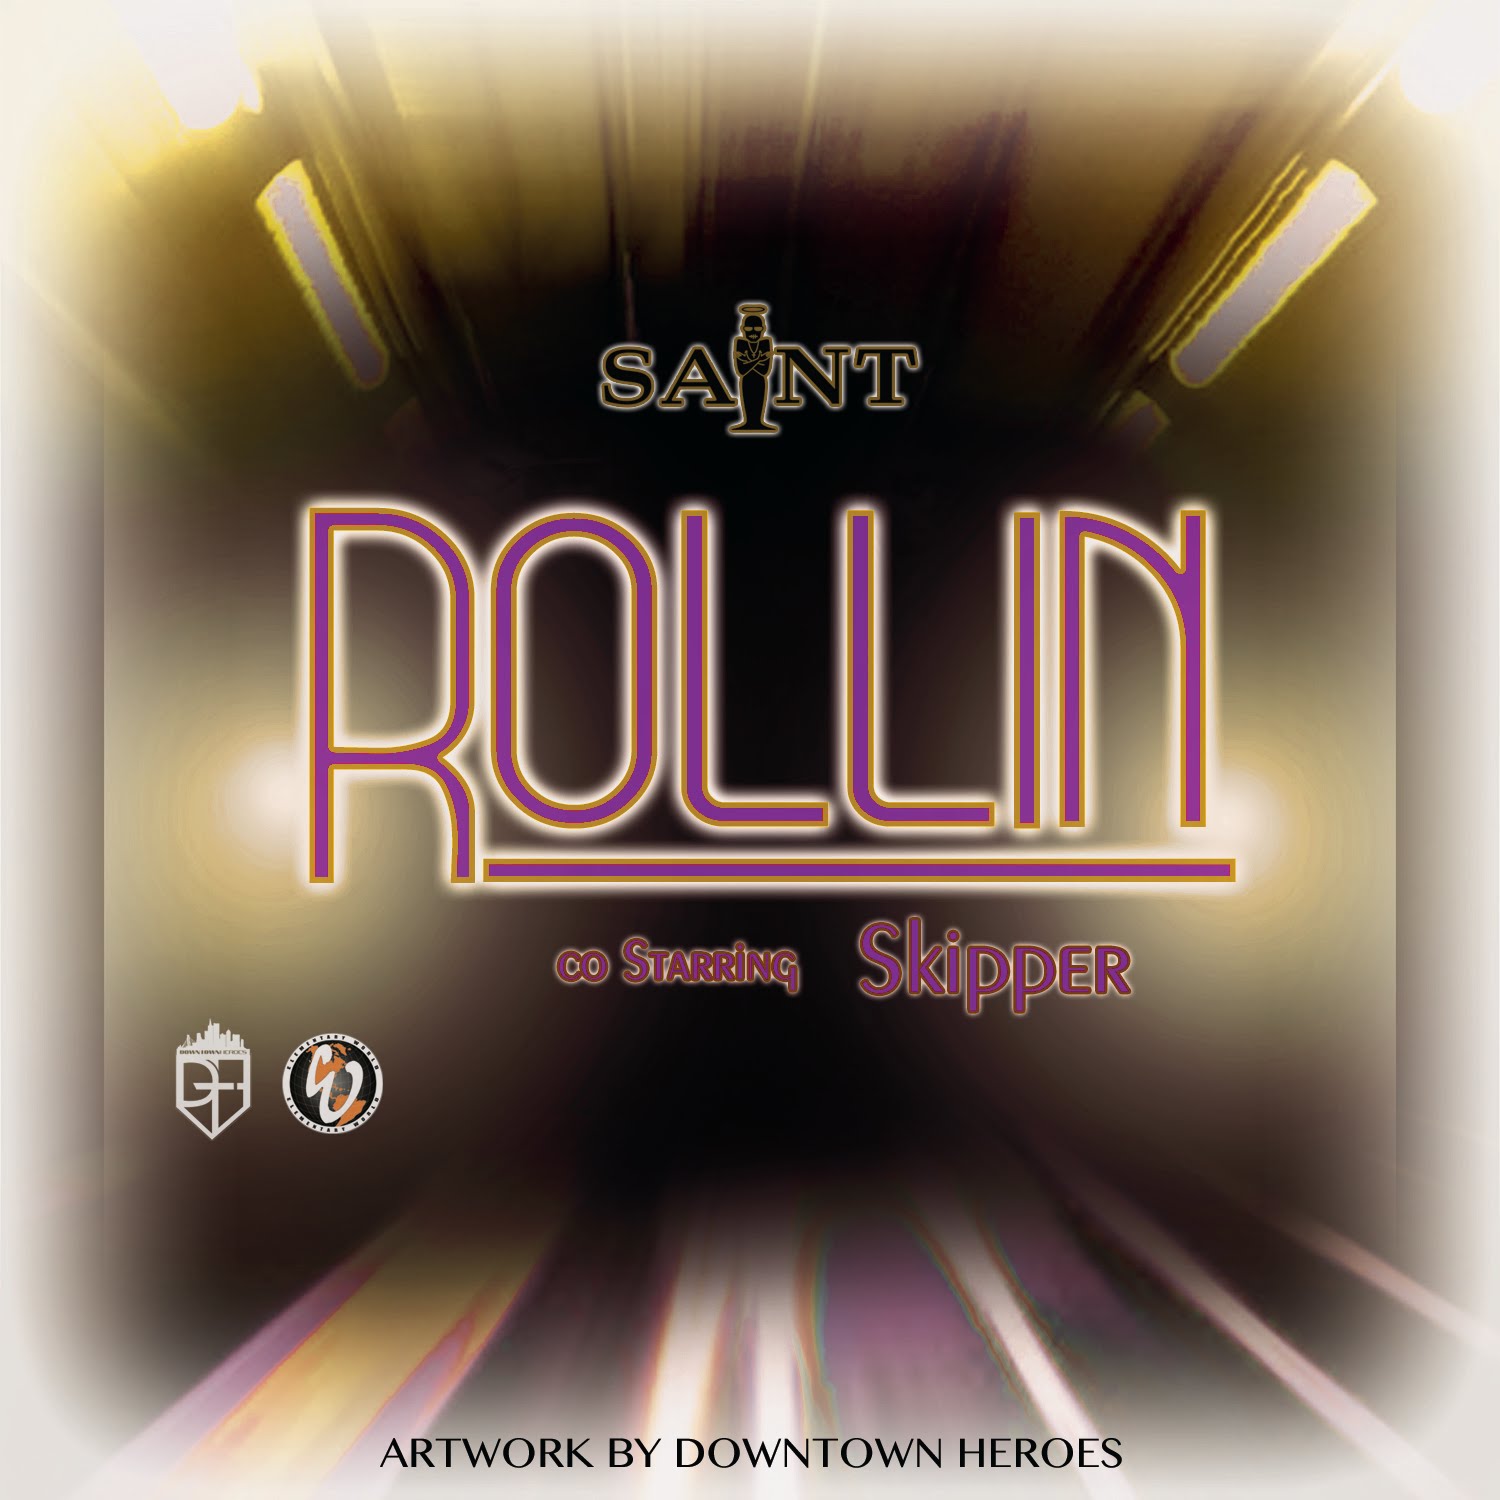 New Music: Rollin by Saint ft. HBK Skipper